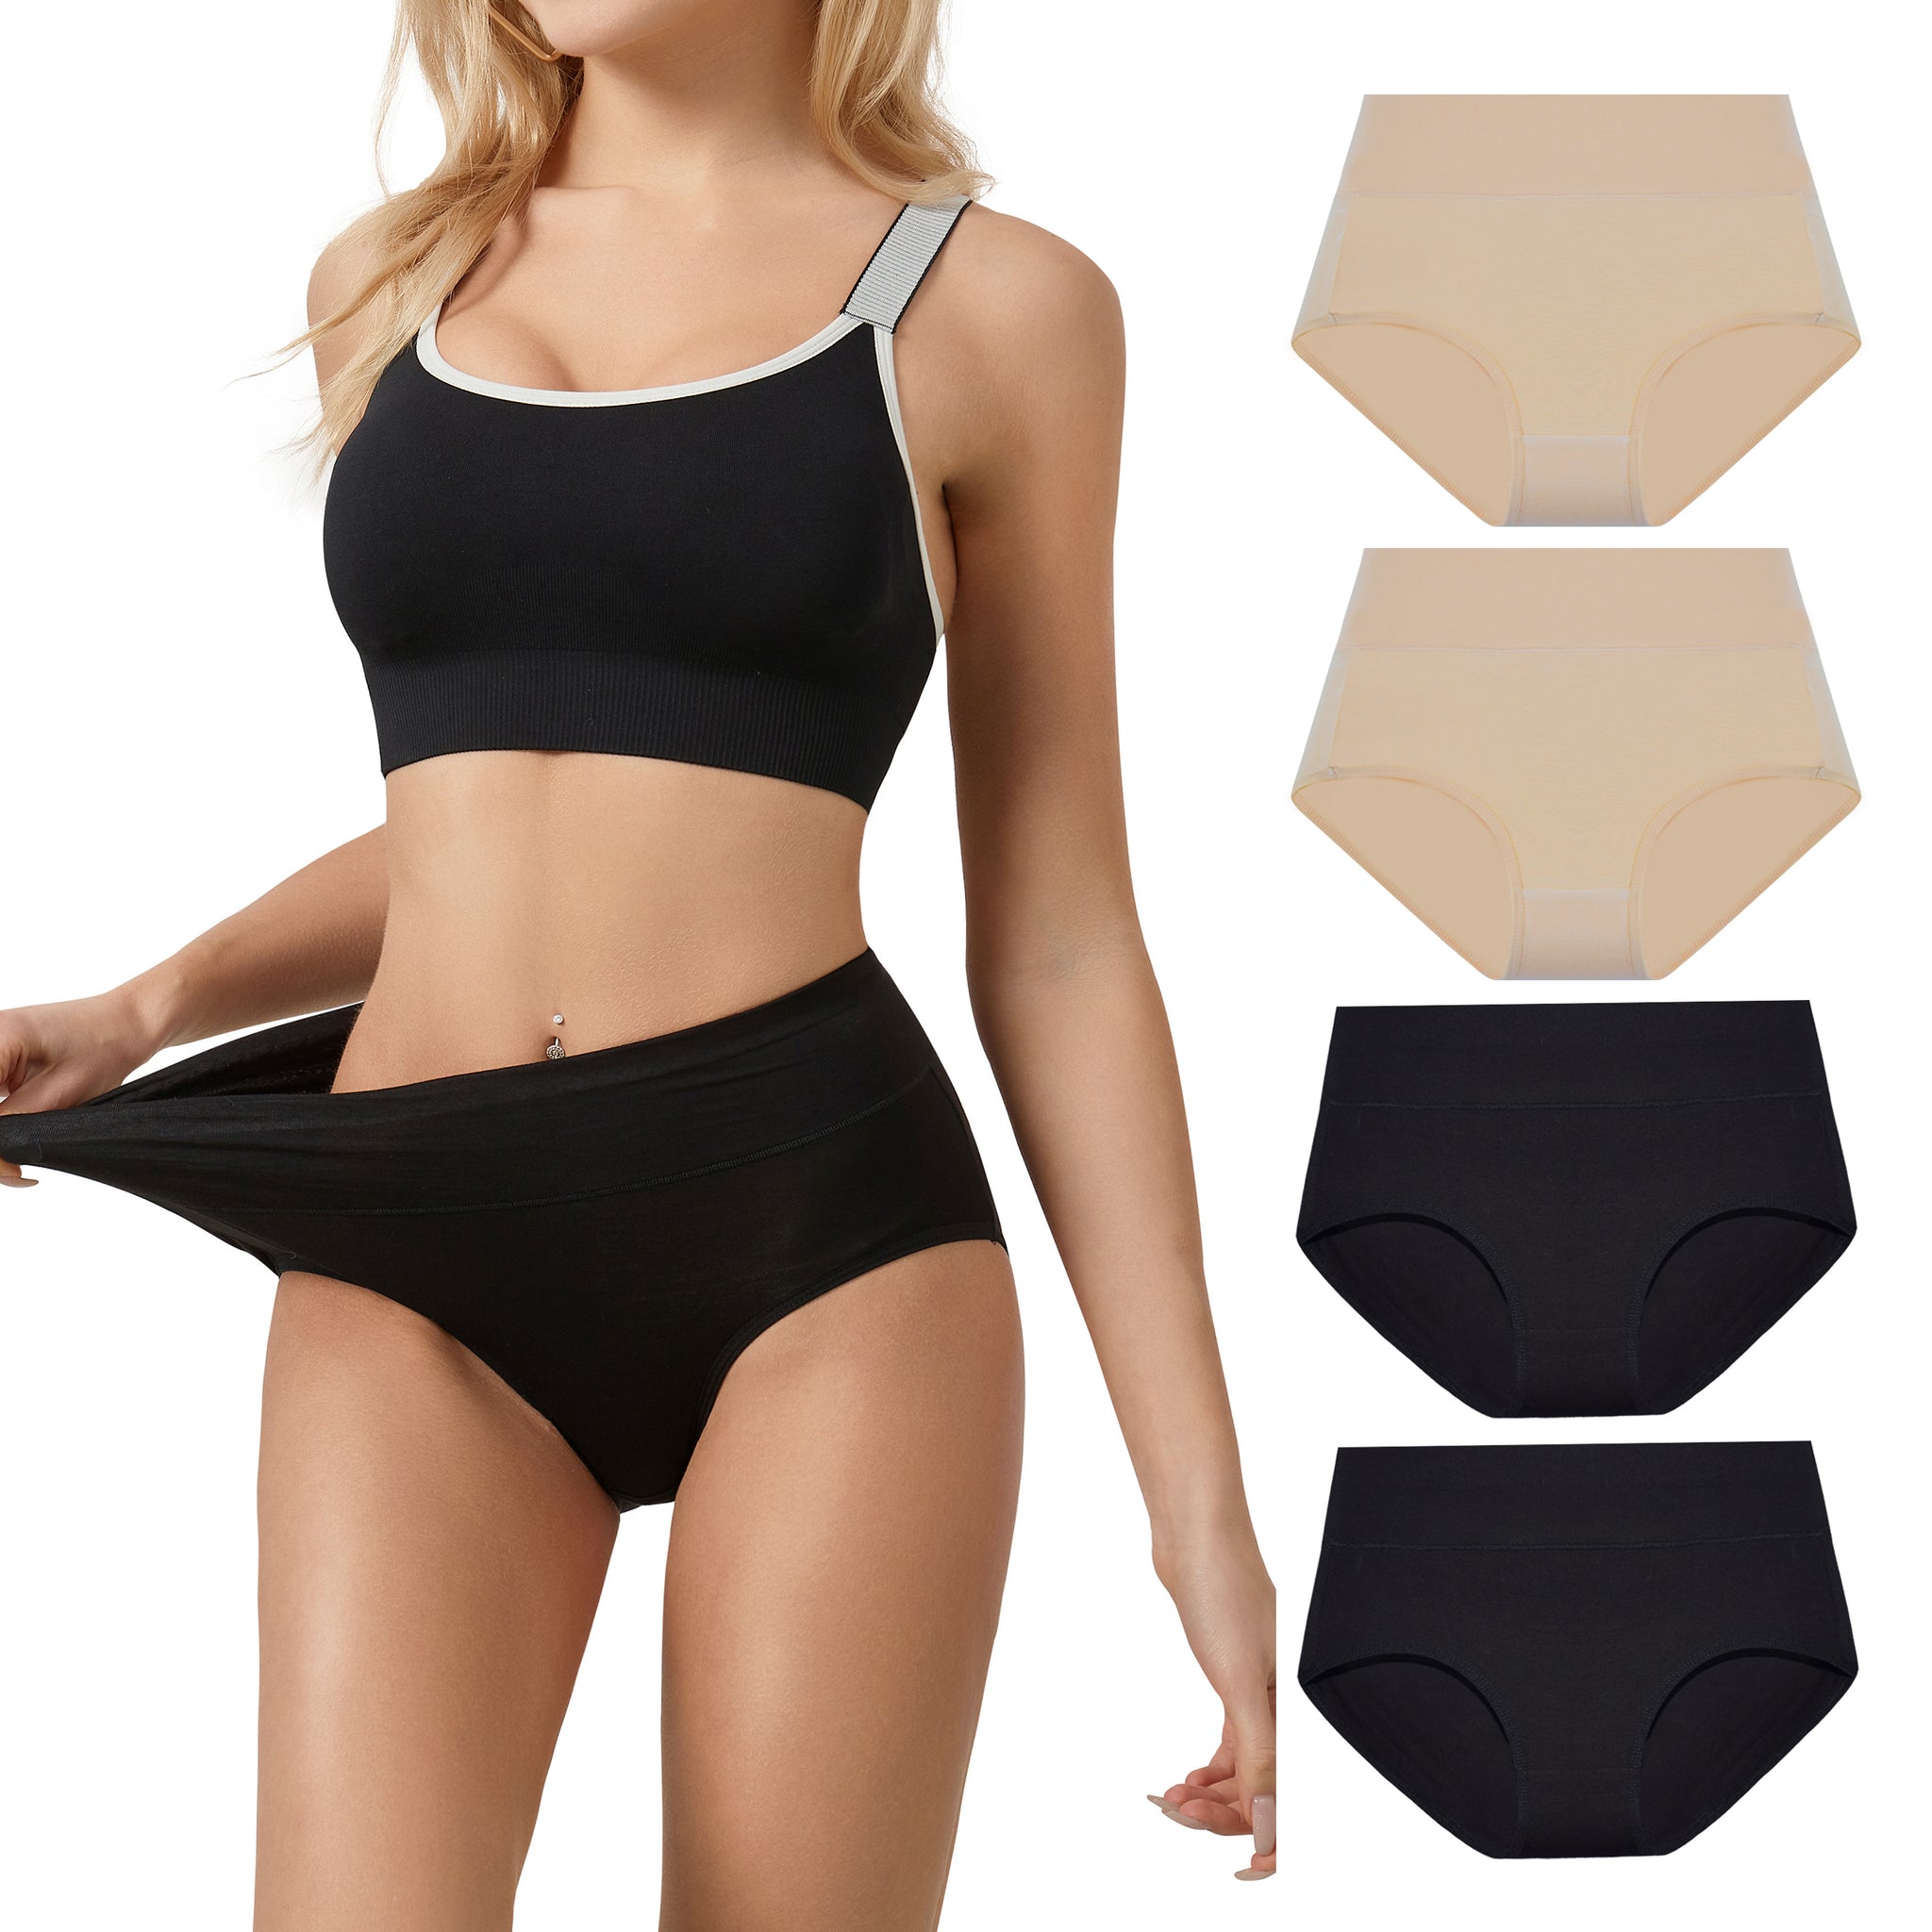 Girls Underpants Sweatproof Underwear Bamboo Breathable Underwear